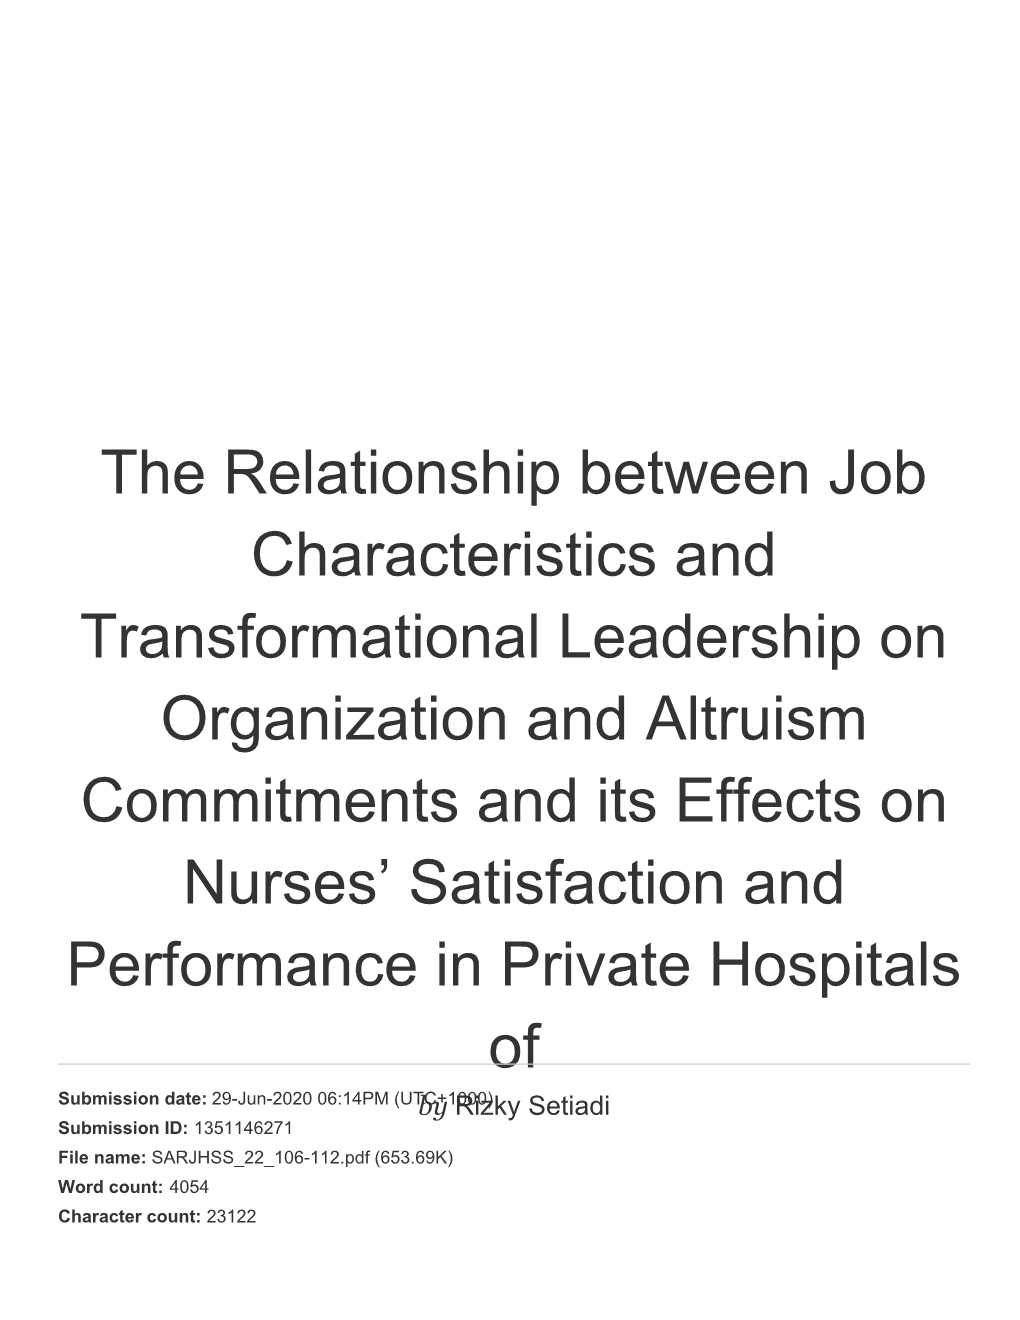 The Relationship Between Job Characteristics And